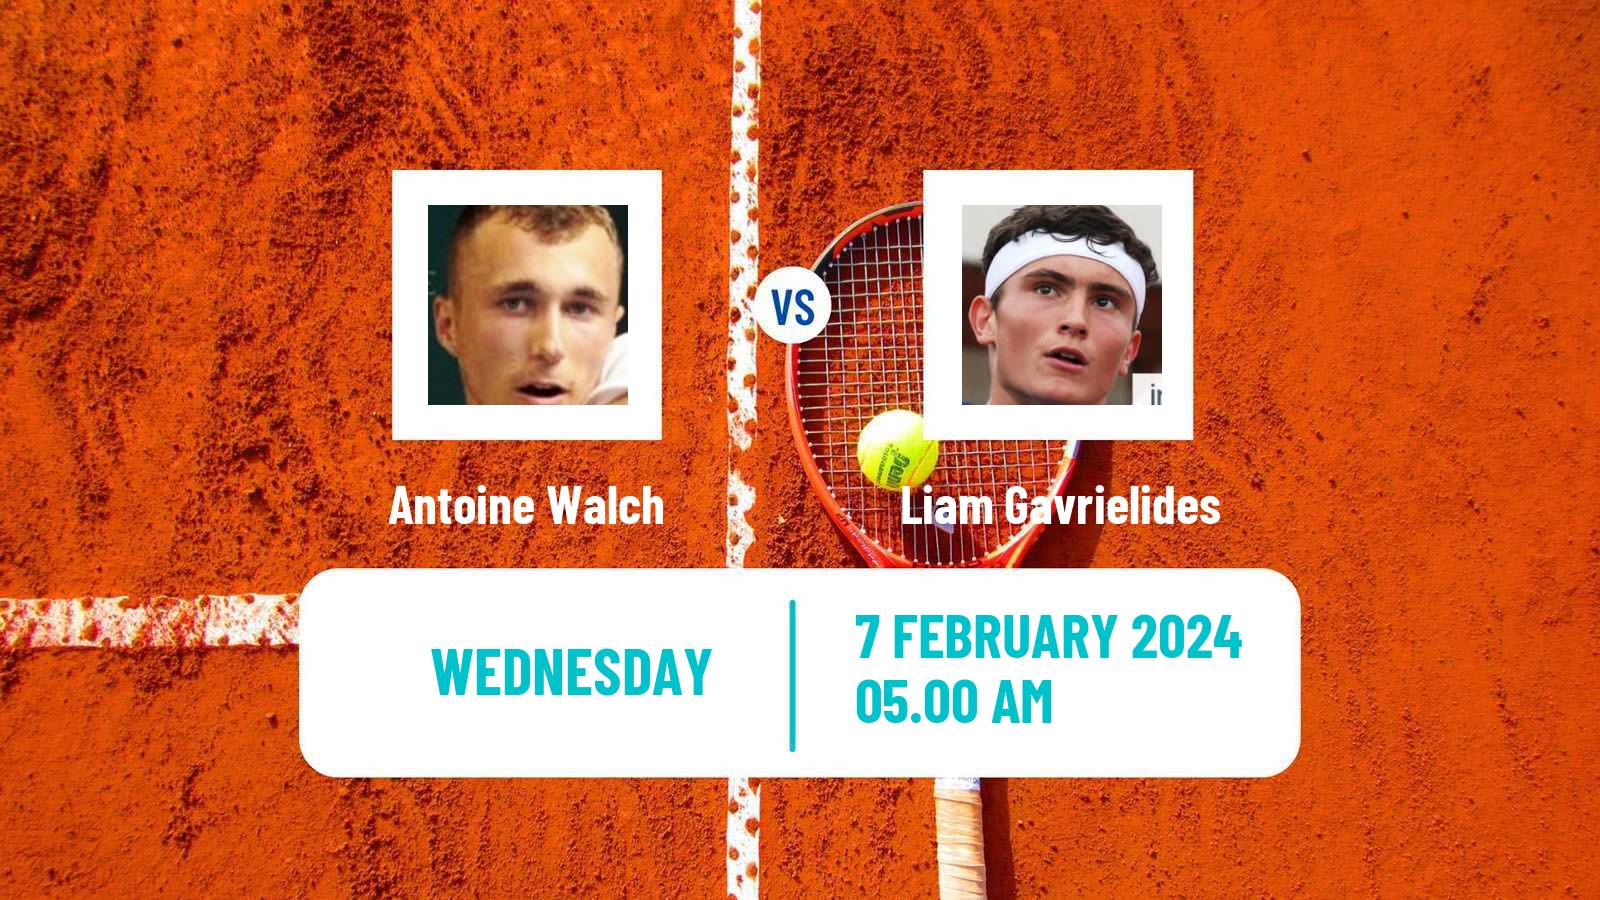 Tennis ITF M15 Grenoble Men Antoine Walch - Liam Gavrielides